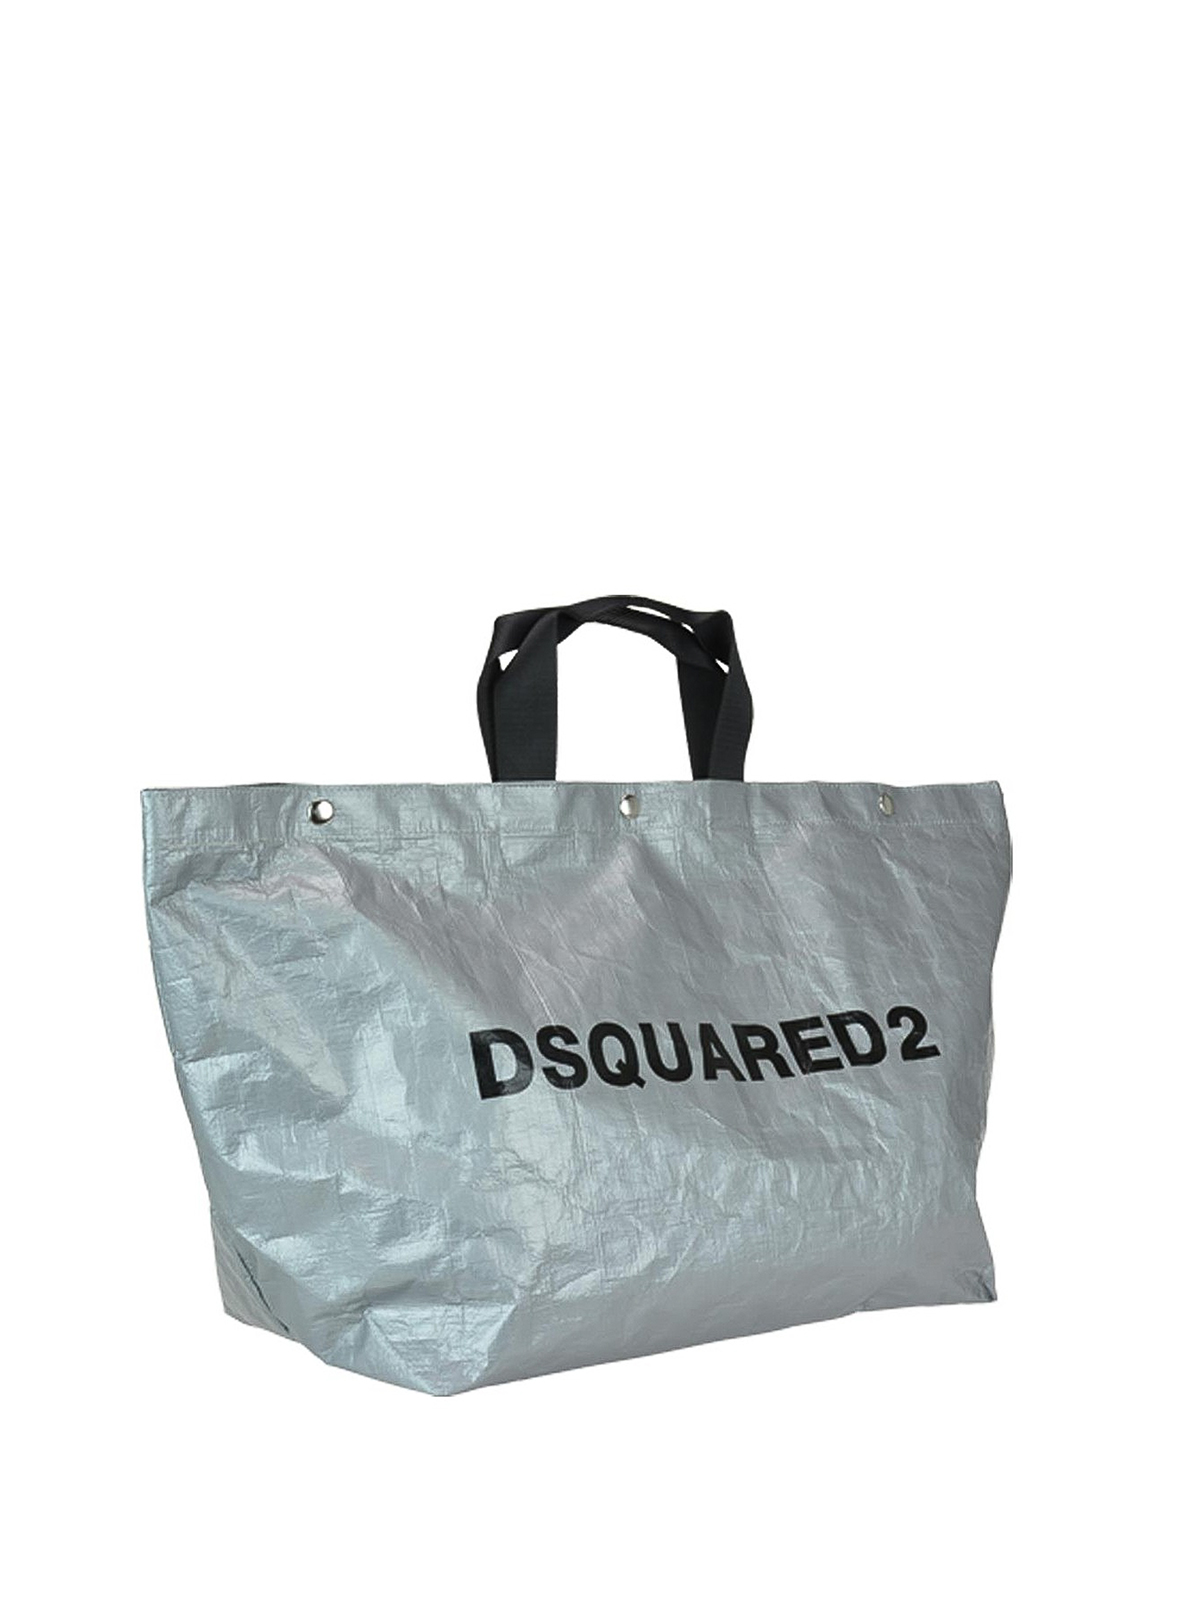 DSQUARED2 - Logo Shopping Bag